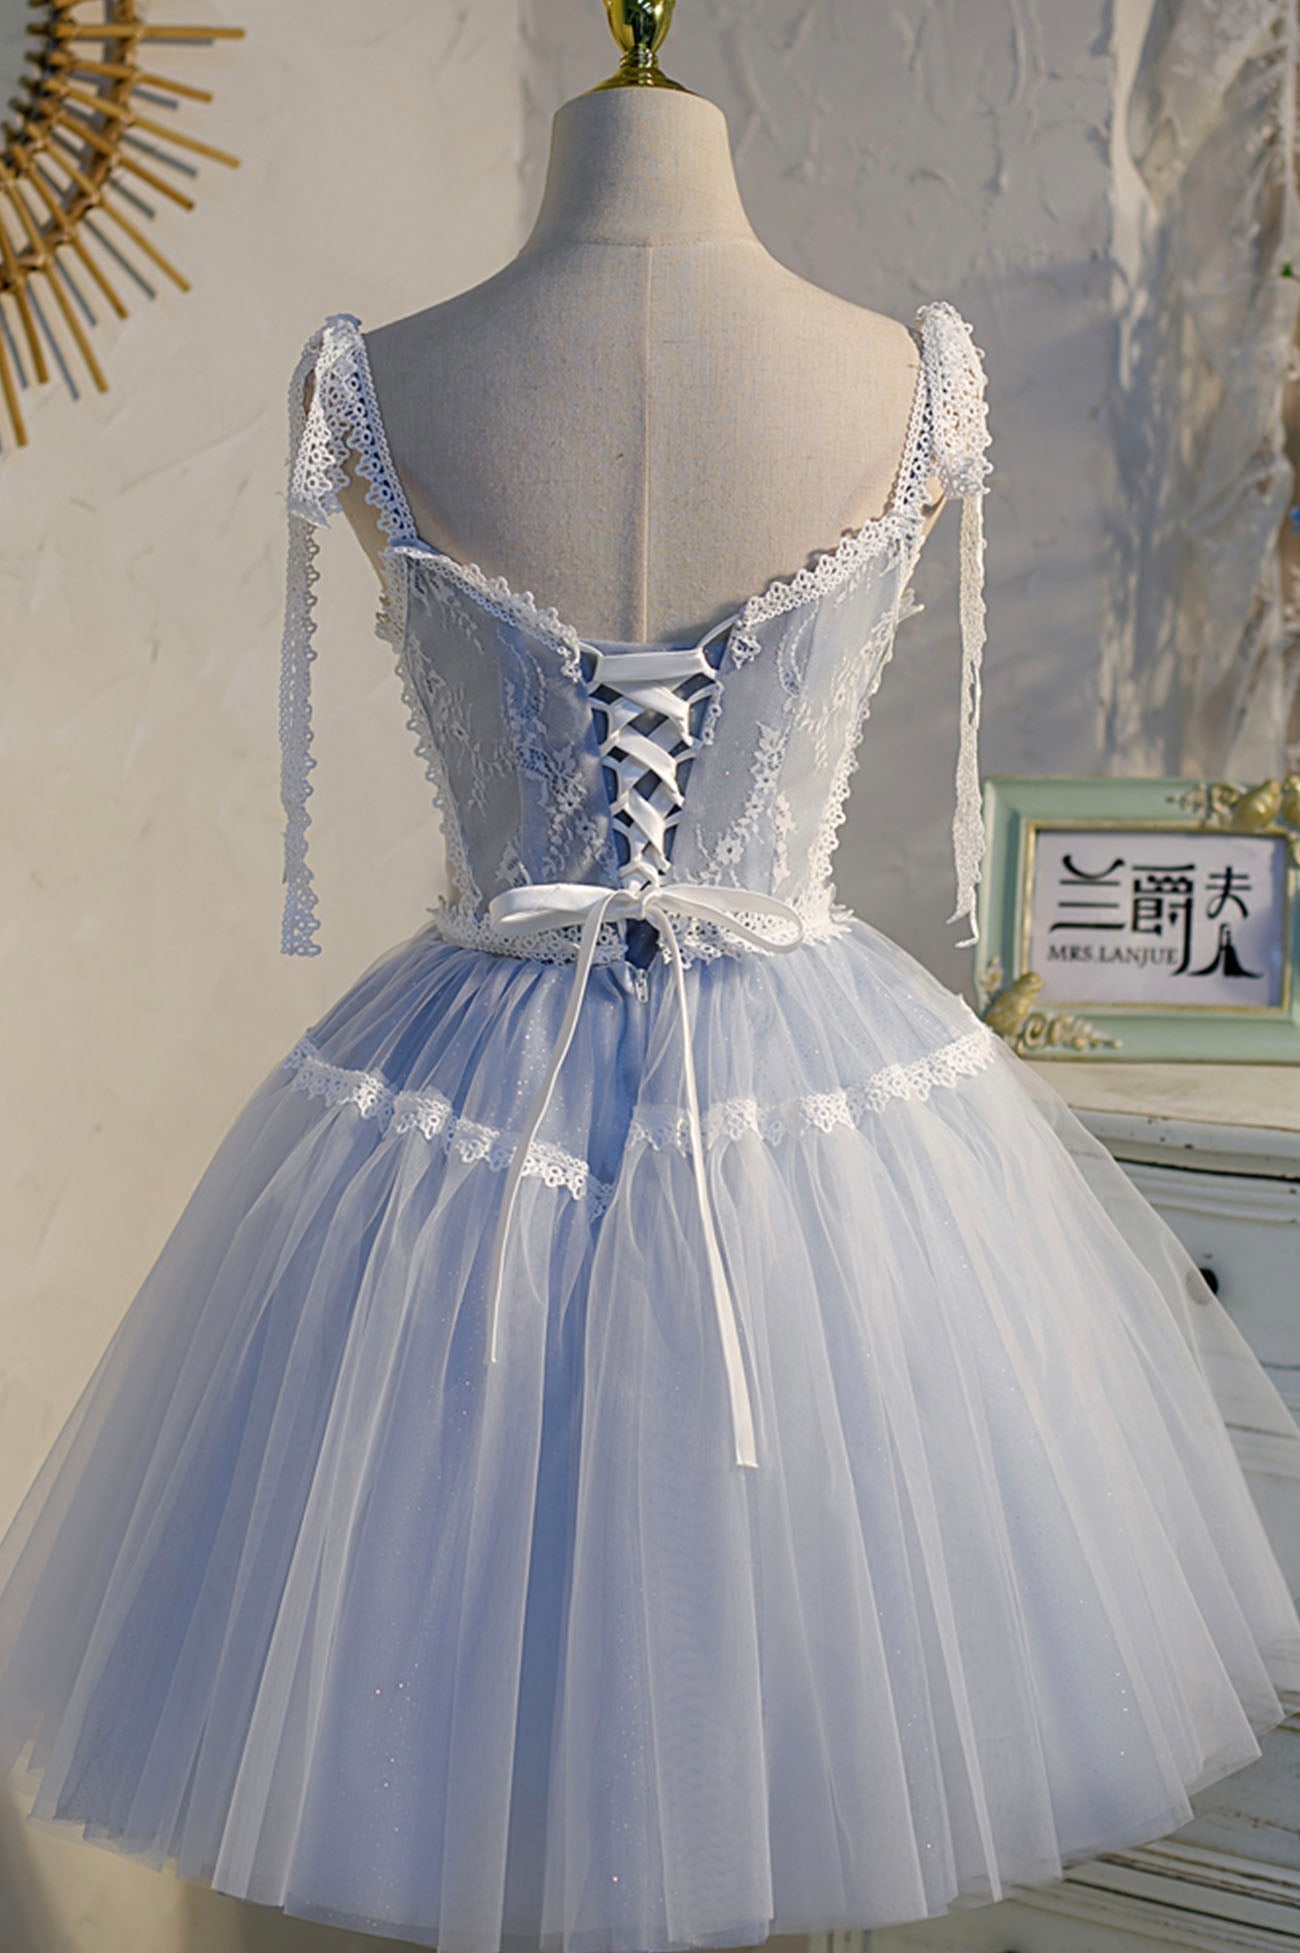 Bridesmaid Dresses Website, Blue Lace Short A-Line Prom Dress, Cute Spaghetti Strap Party Dress